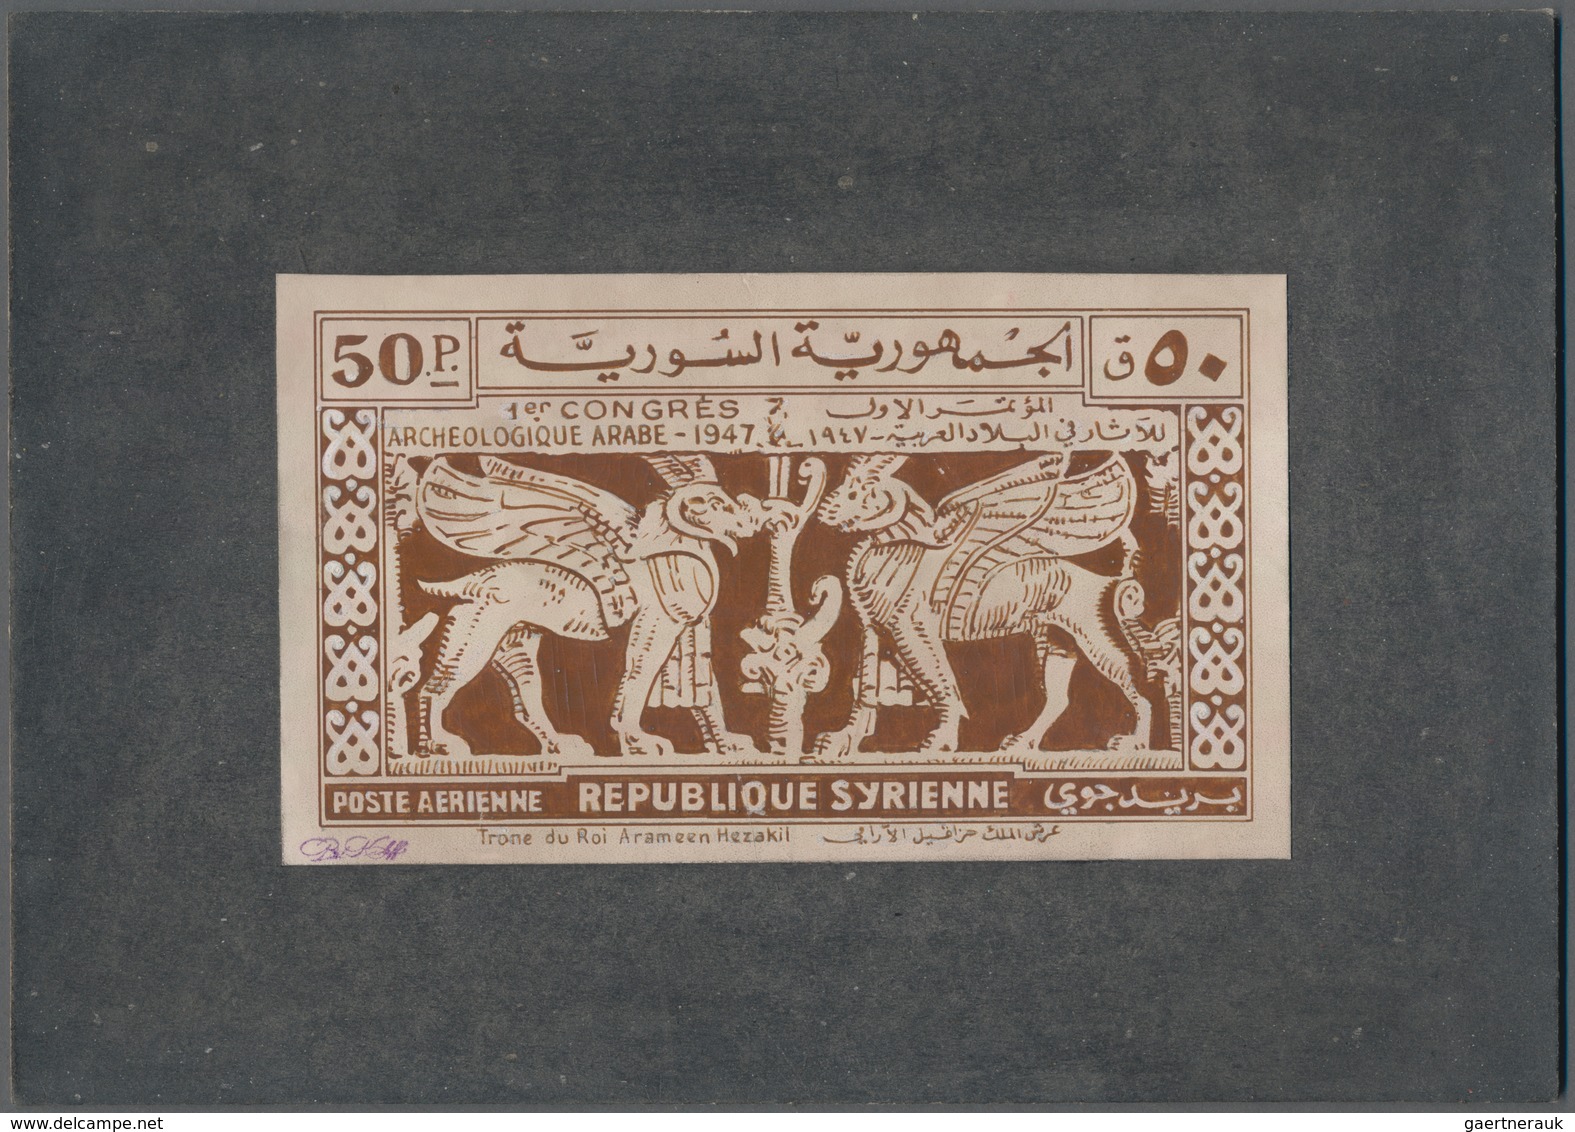 Thematik: Archäologie / Archeology: 1947, Syria, Issue First Arab Archeology Congress, Artist Drawin - Archaeology